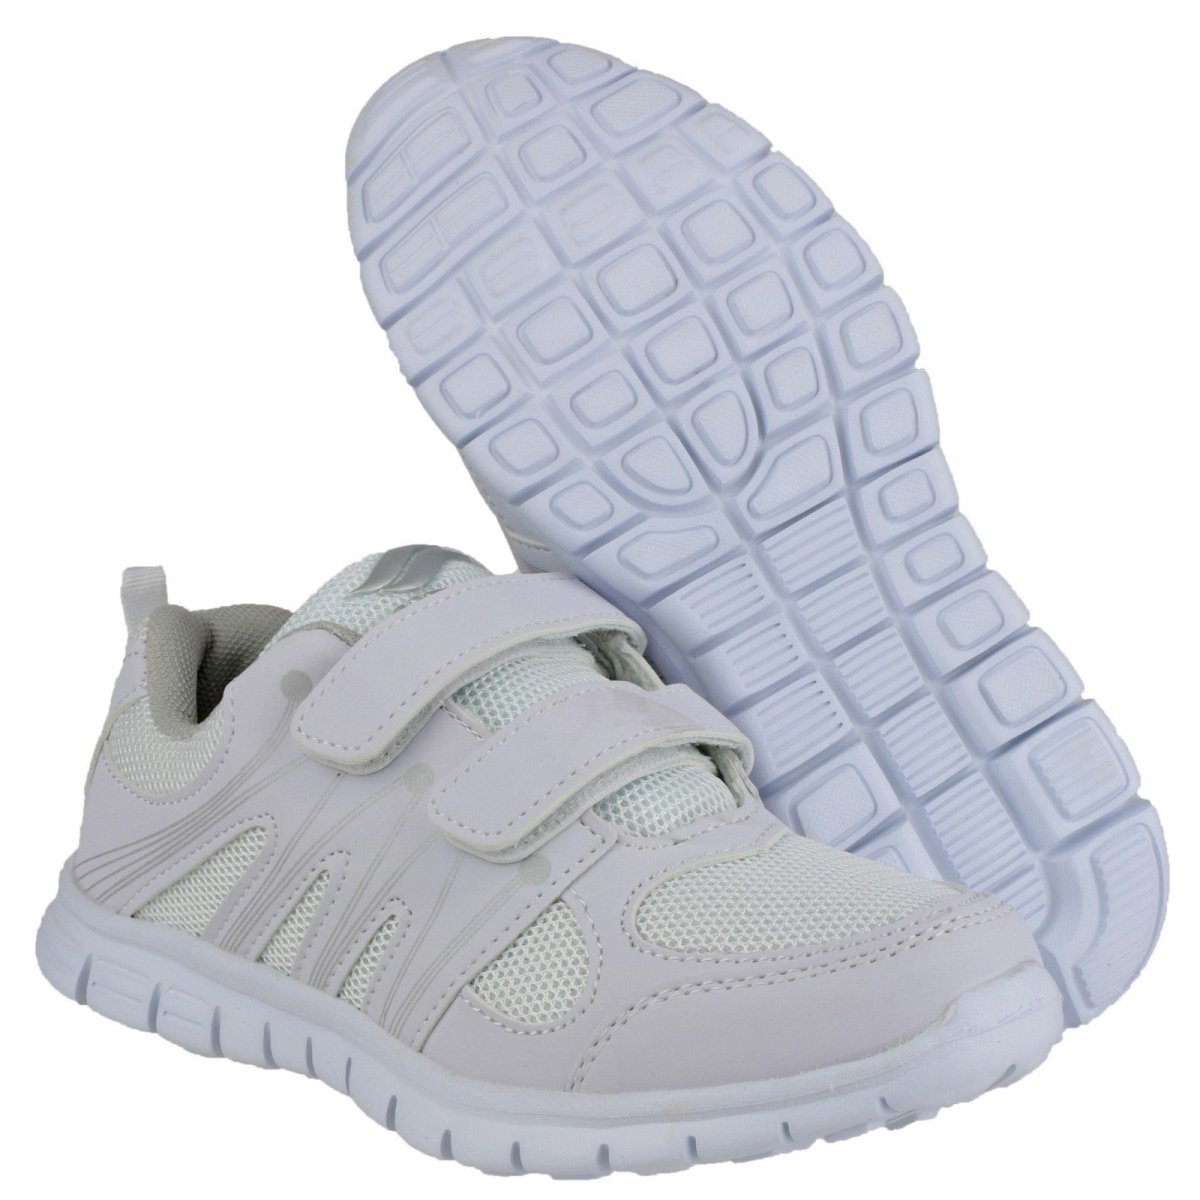 Mirak Milos Touch Fastening Sports Shoe - Shoe Store Direct